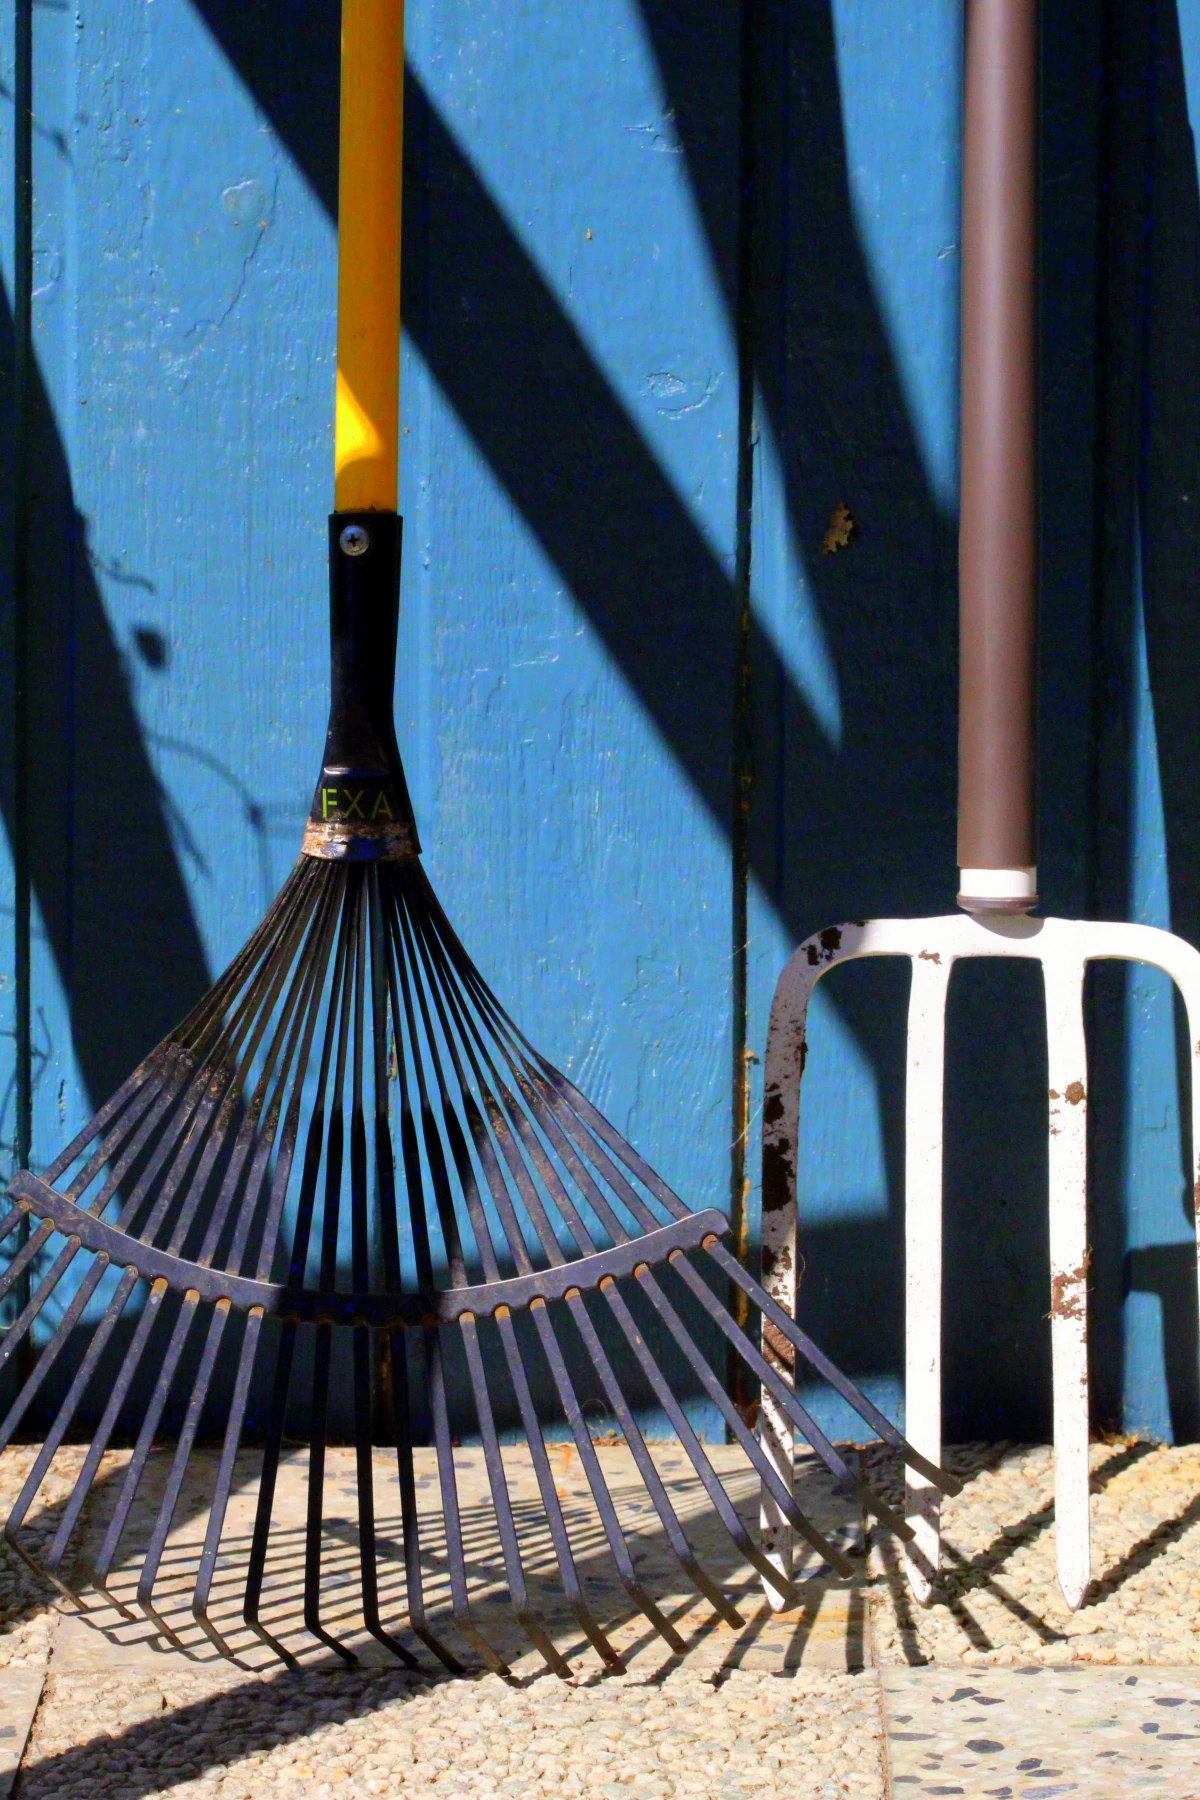 rake and fork garden tools